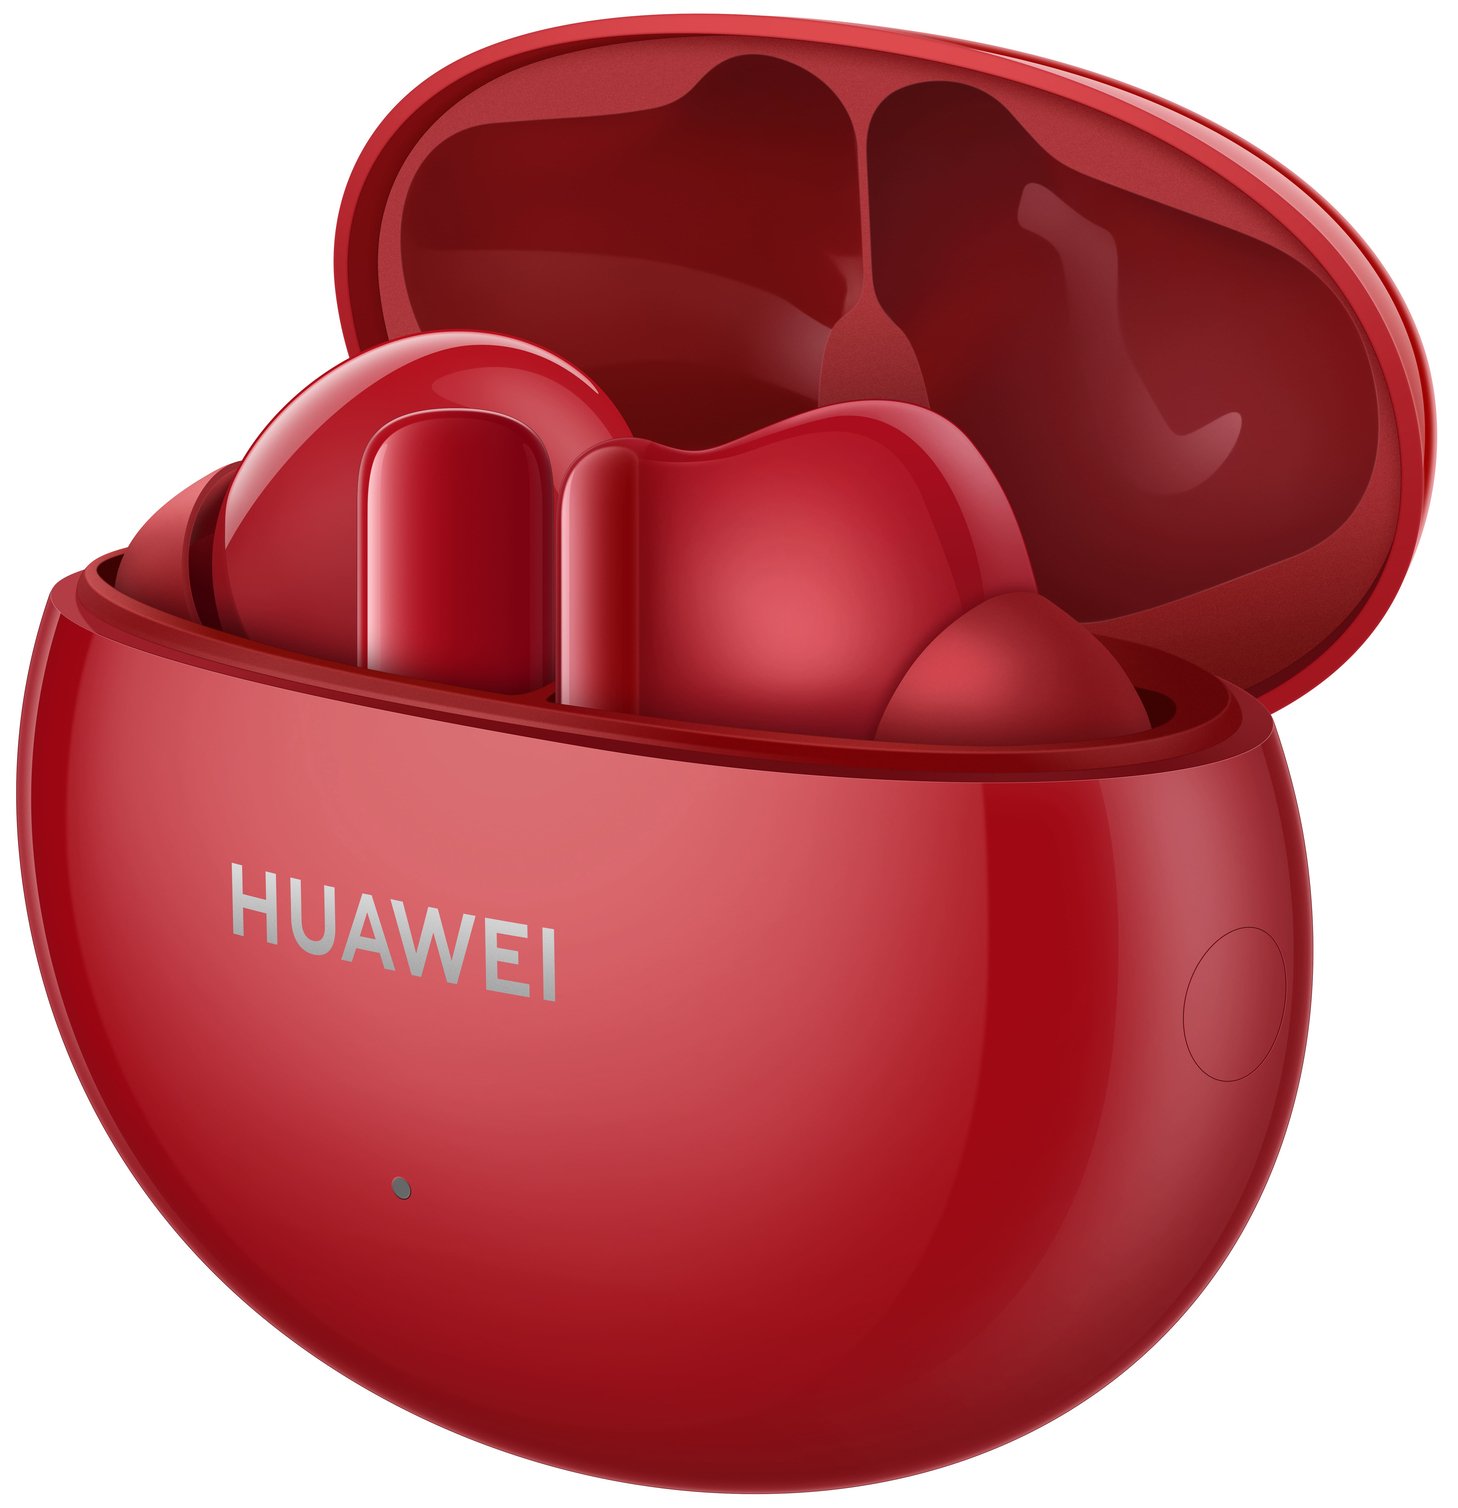 Huawei freebuds купить москва. Huawei 4i наушники беспроводные. Беспроводные наушники Huawei freebuds 4i. Наушники Хуавей freebuds 4. Беспроводные наушники Huawei freebuds 4i красный.